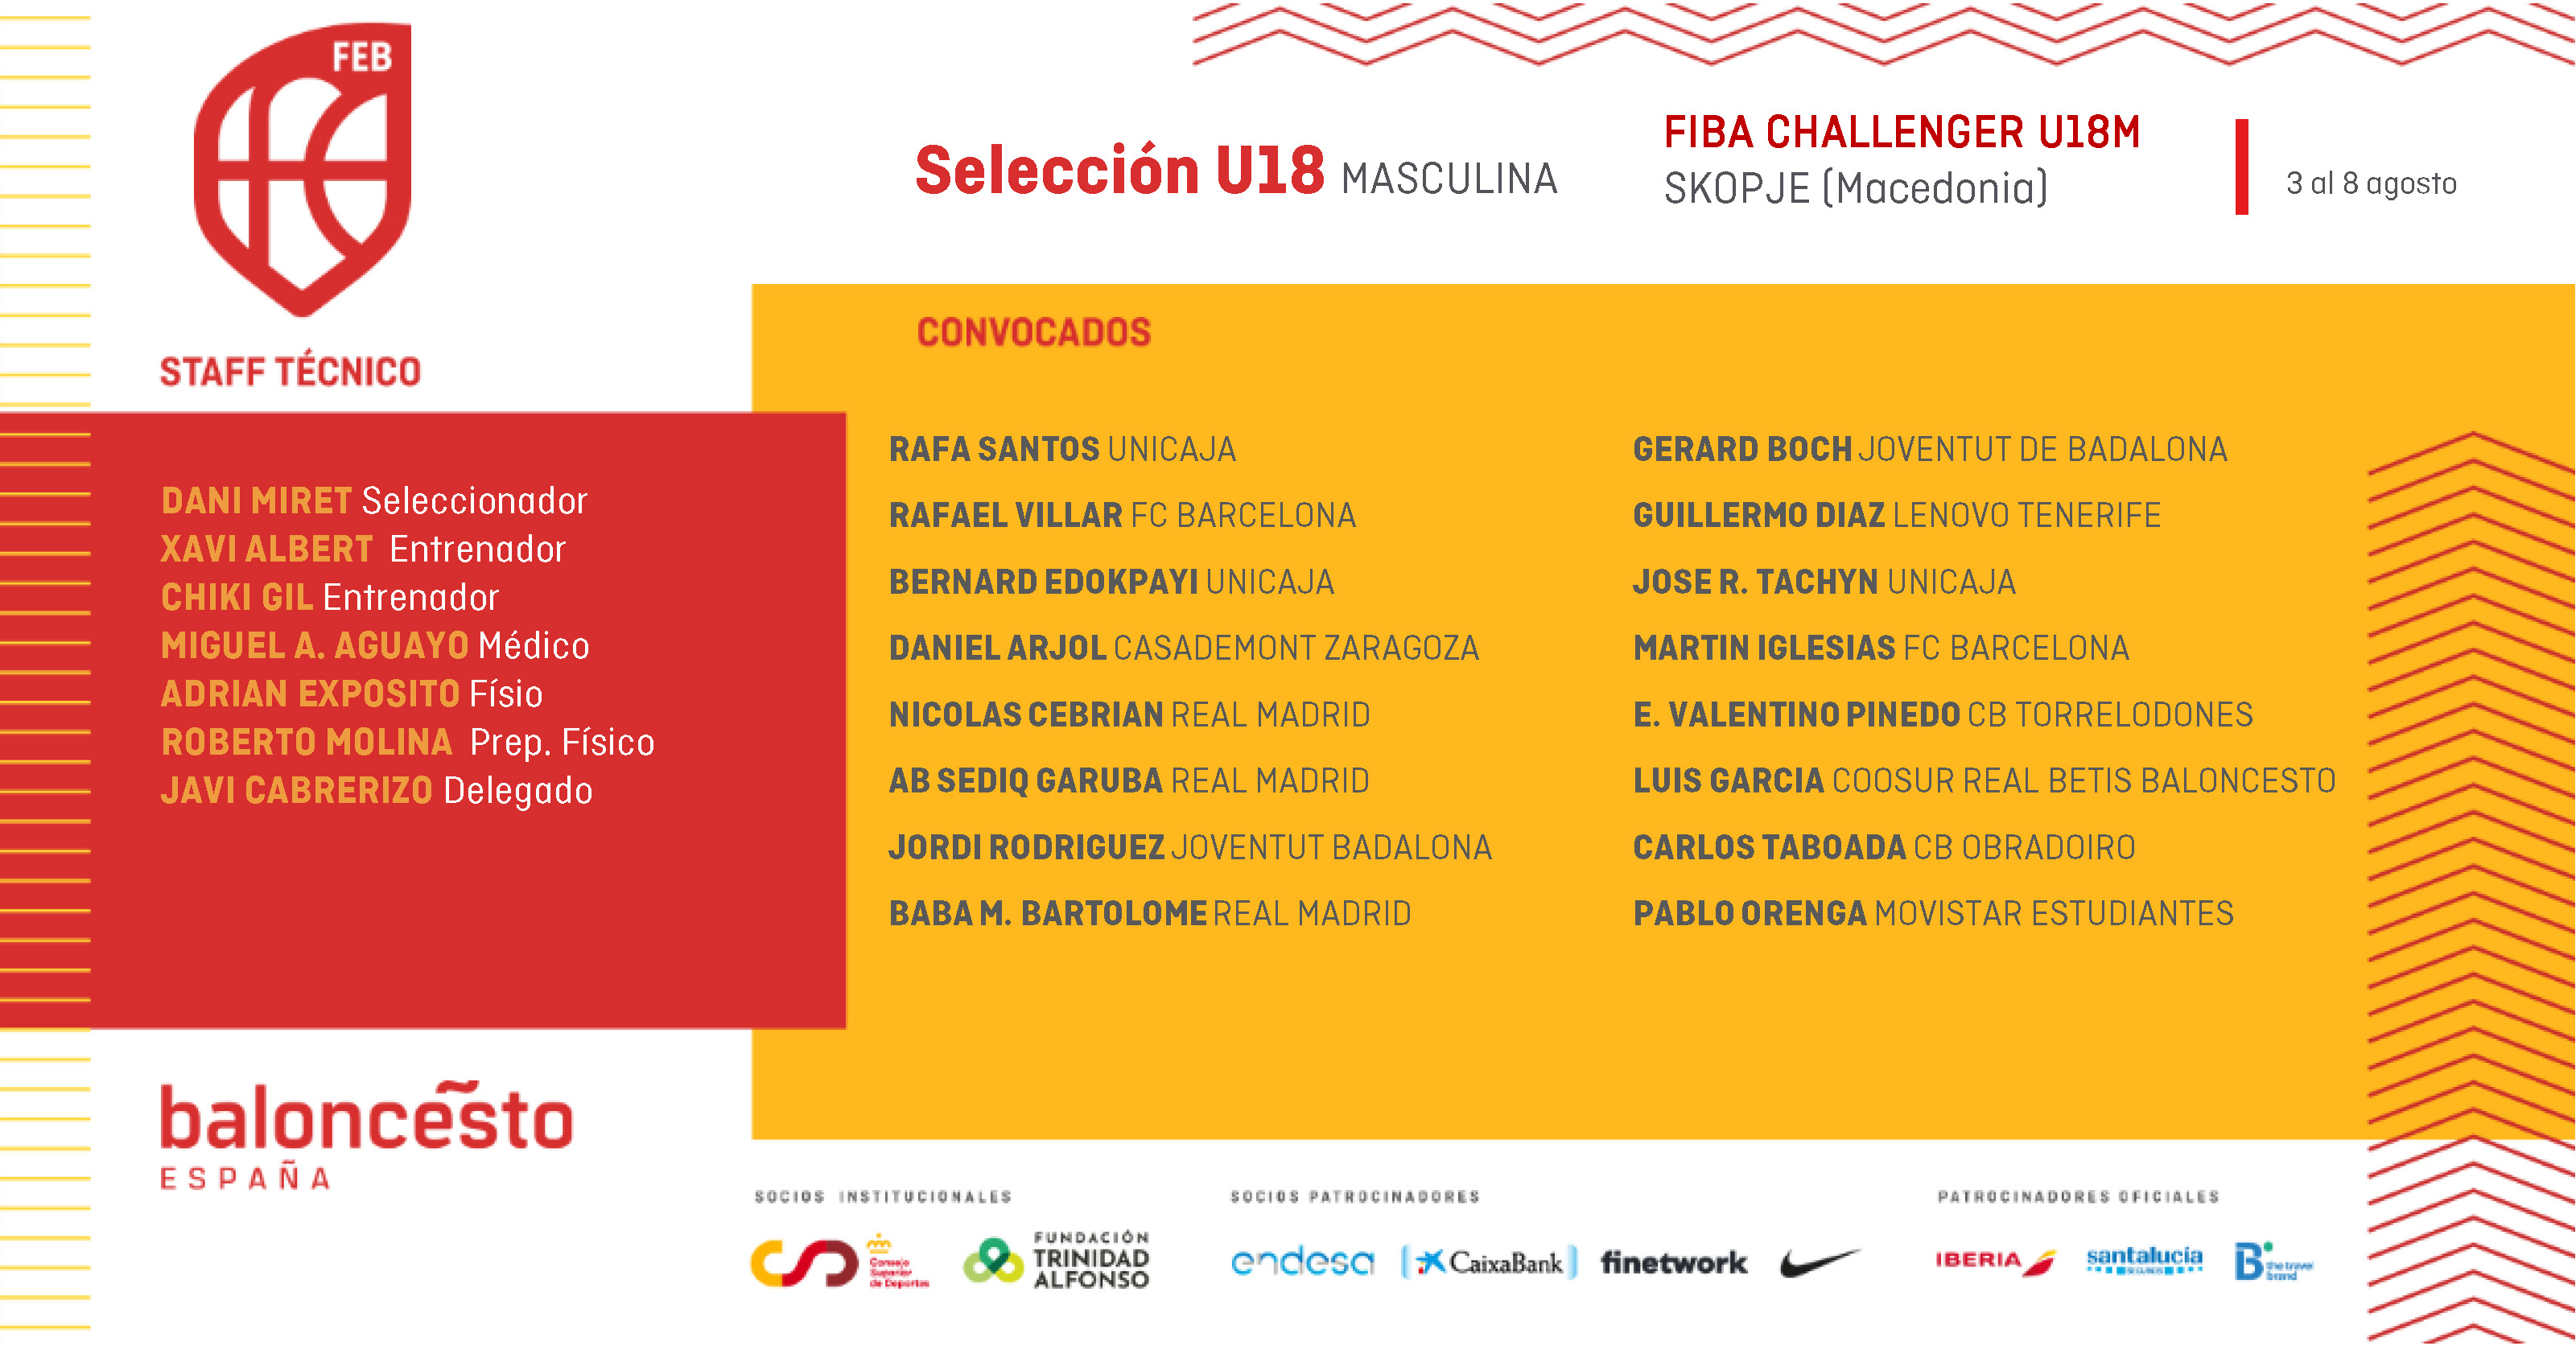 Convocatoria U18M FIBA Challenger